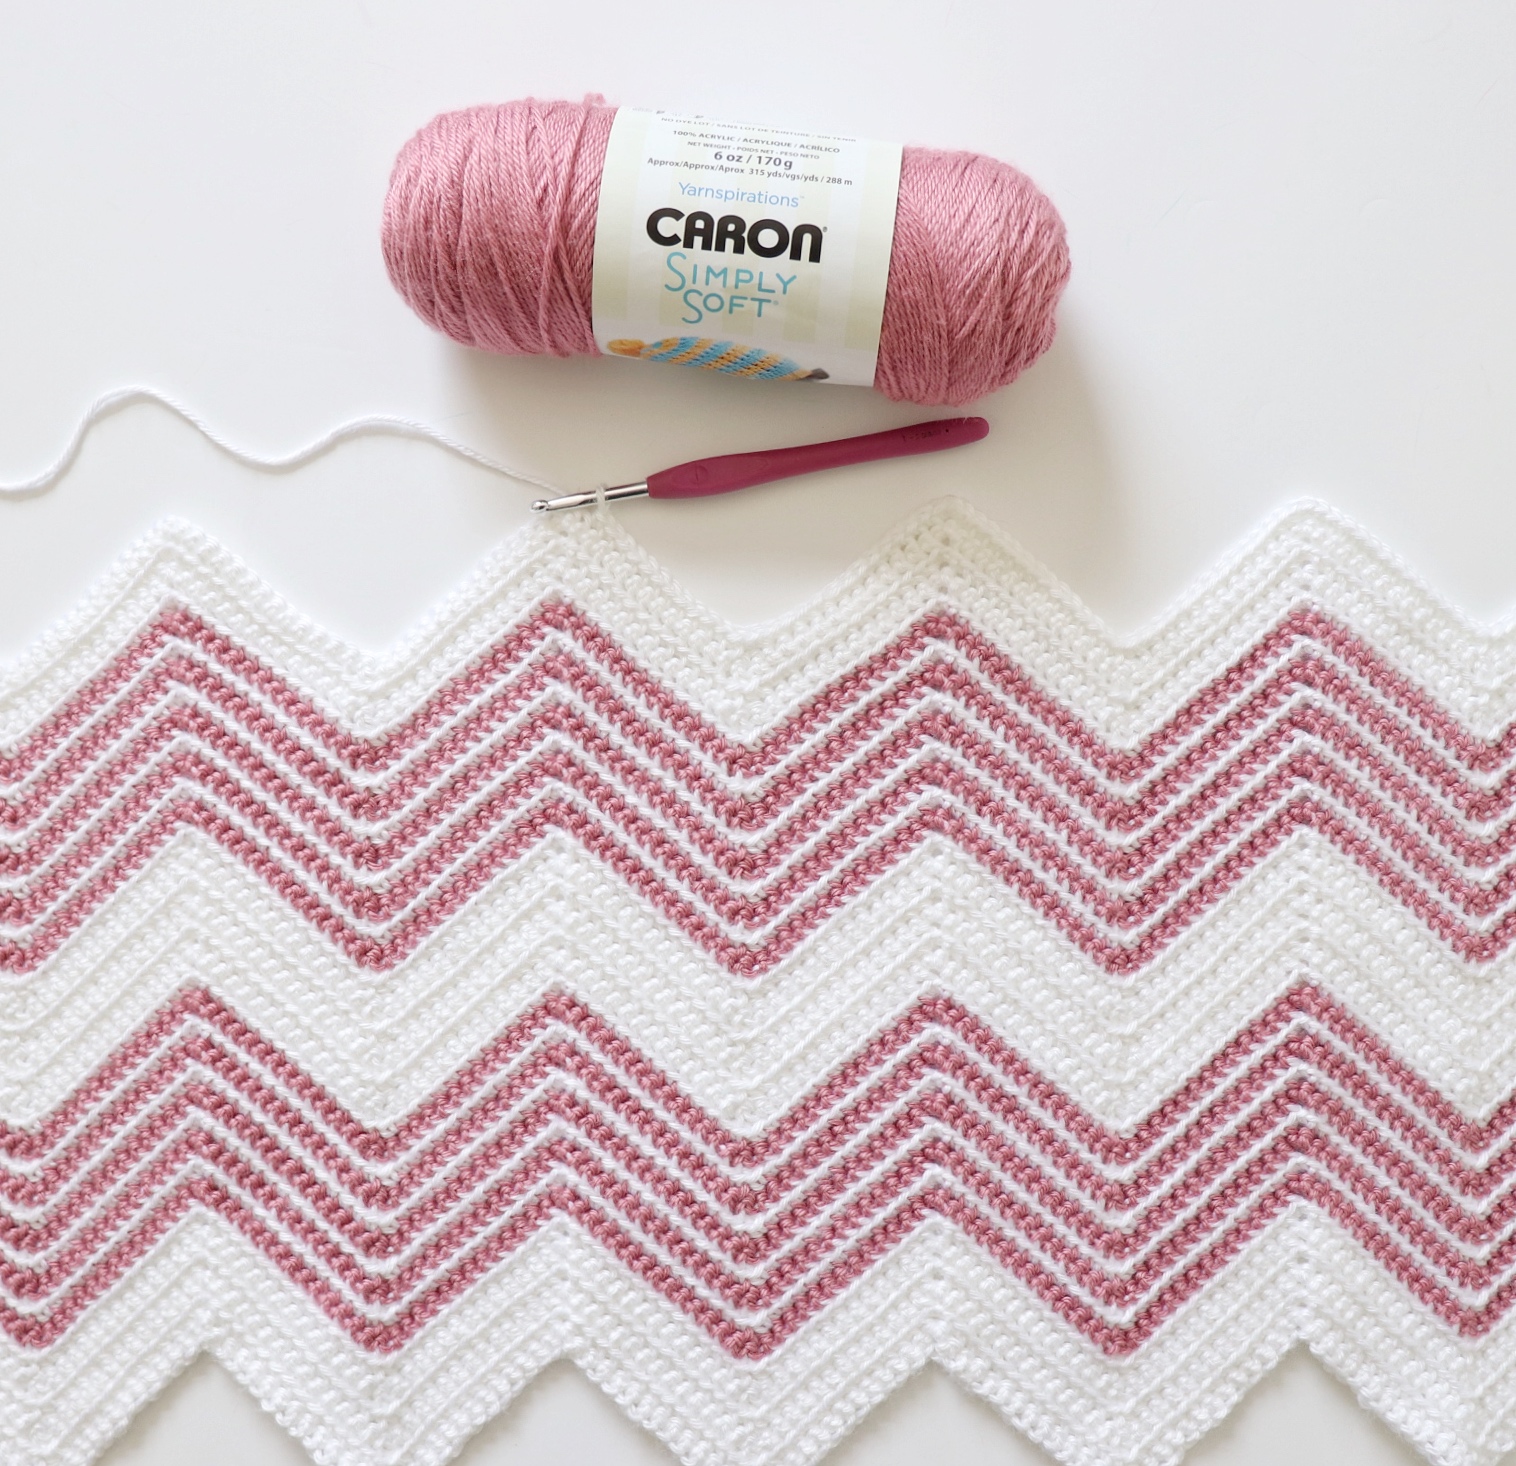 Caron Zigzag Crochet Blanket Pattern